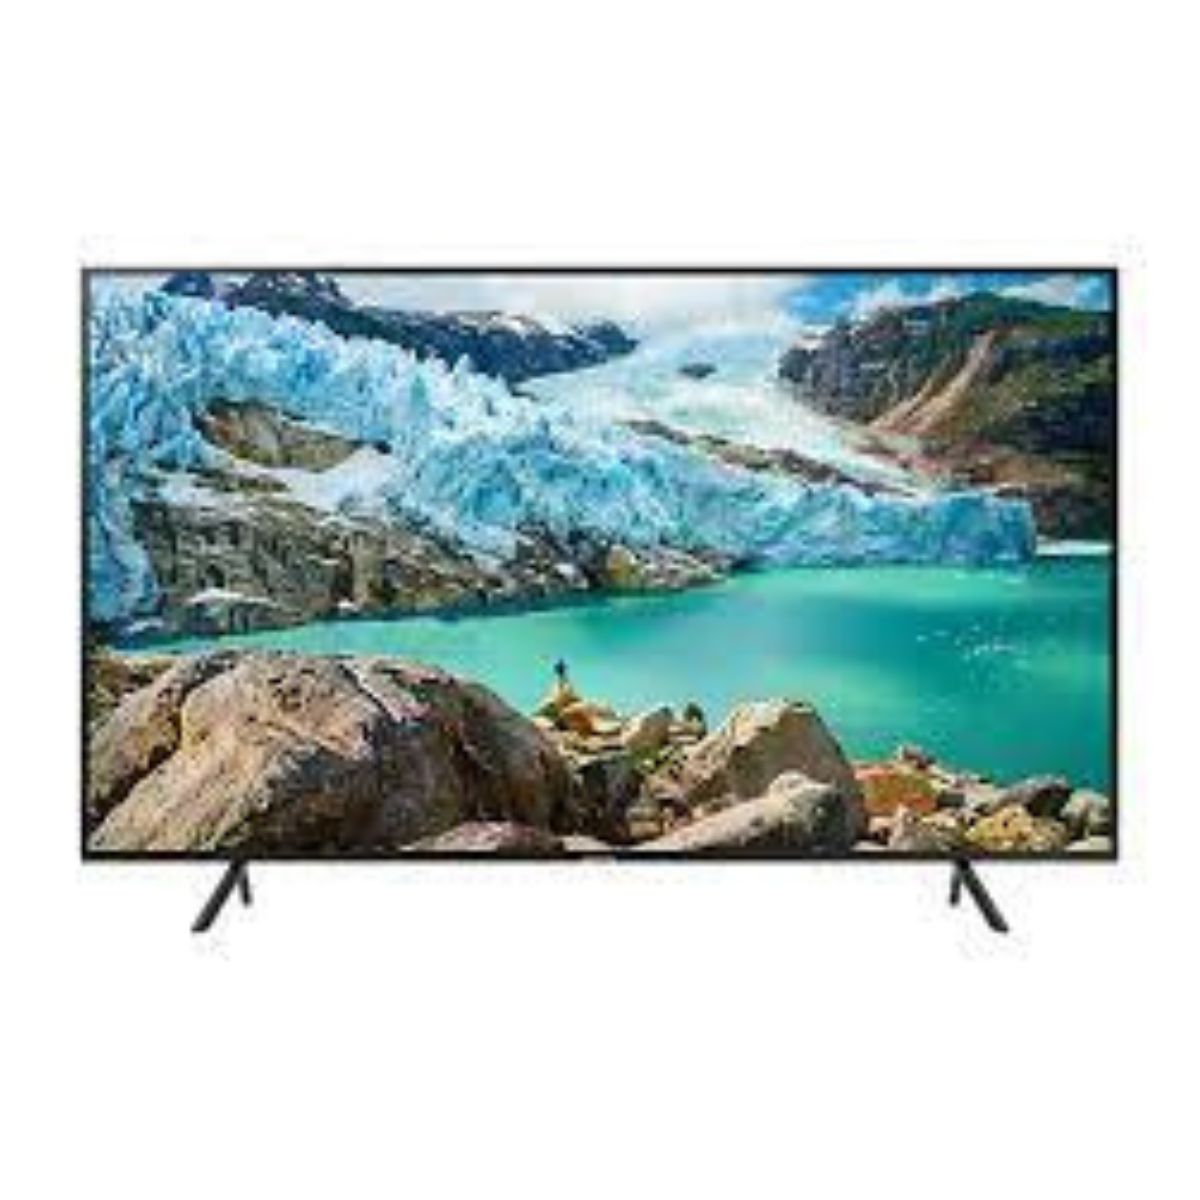 Samsung Smart TV - 4K UHD - UA55AU7500KLXL - 55 Inches